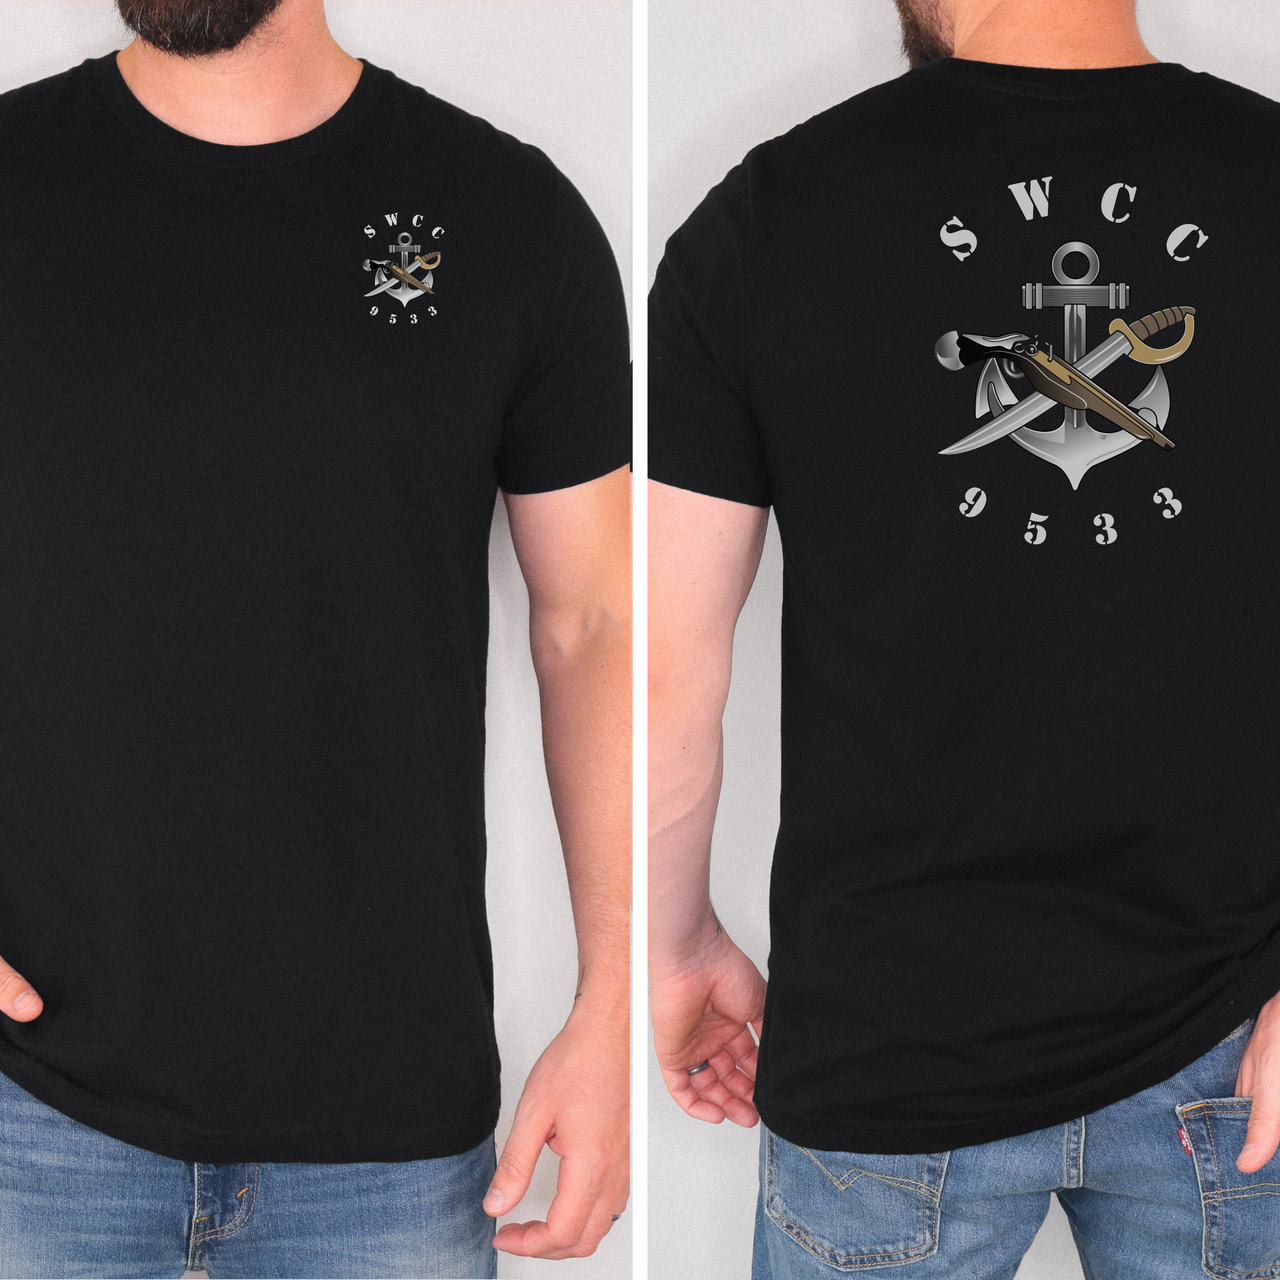 Special Warfare Combatant Craft Crewmen, 9533, T-Shirt (Color)